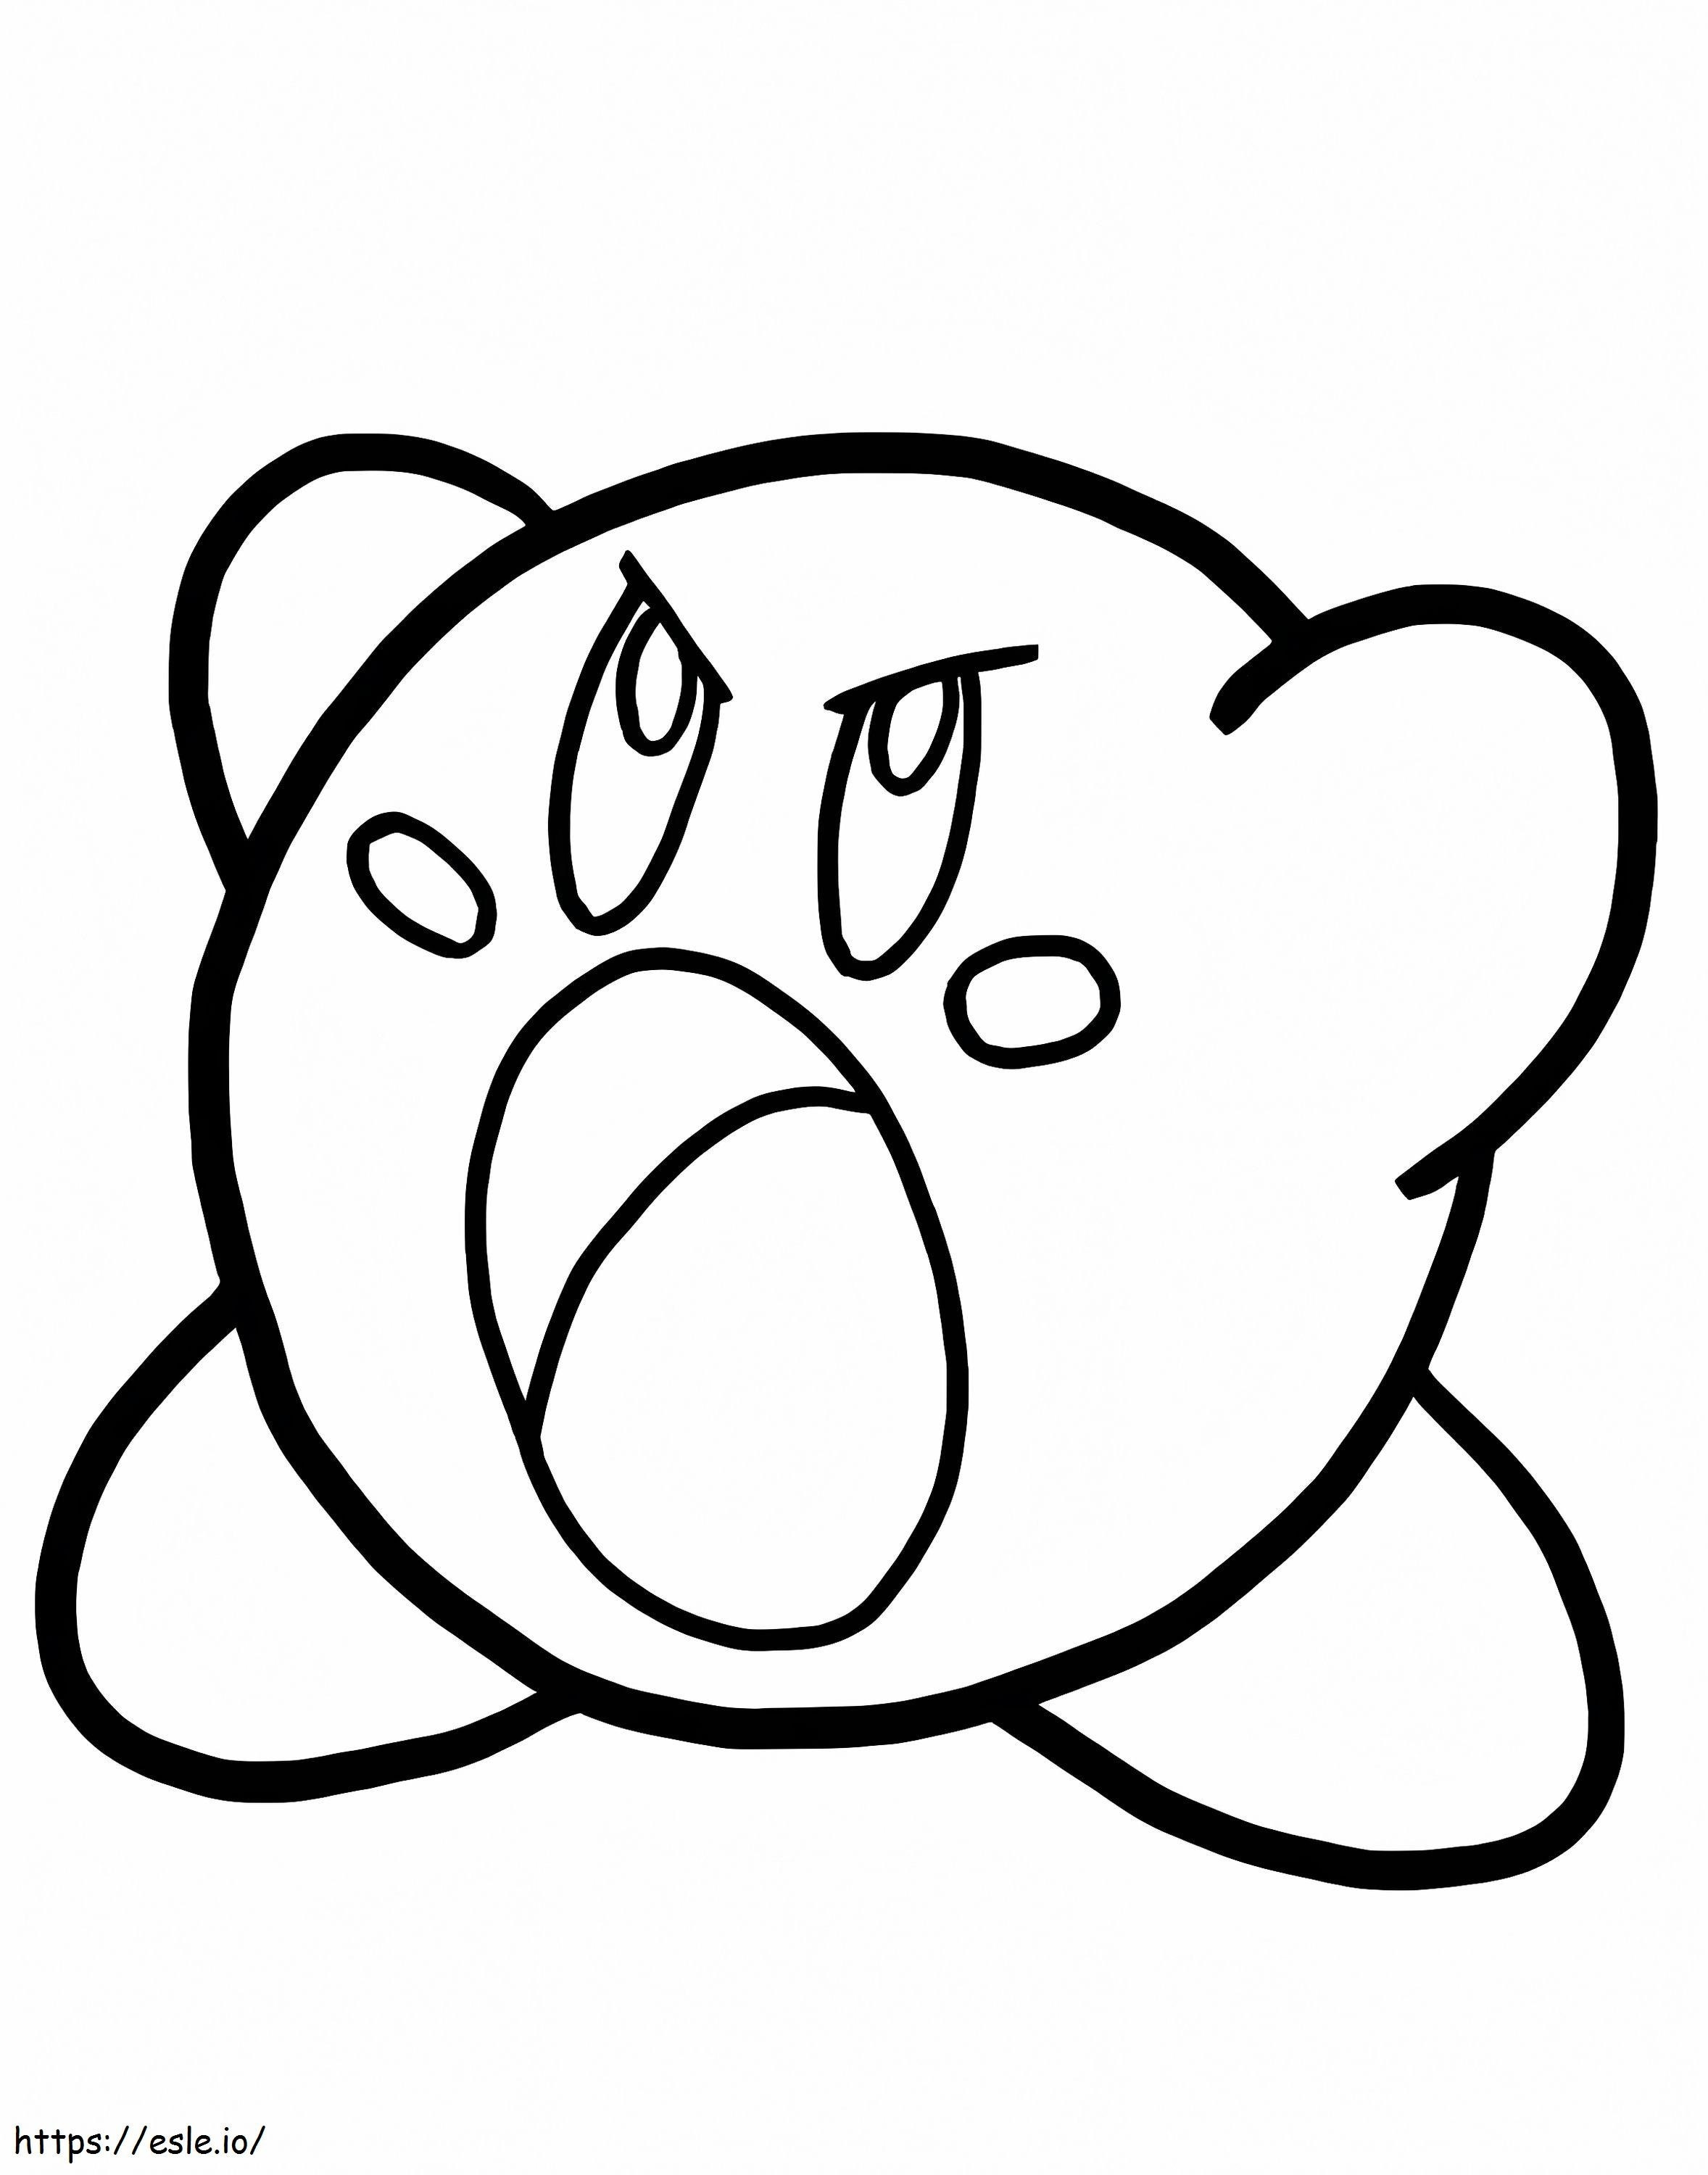 Kirby enojado para colorear